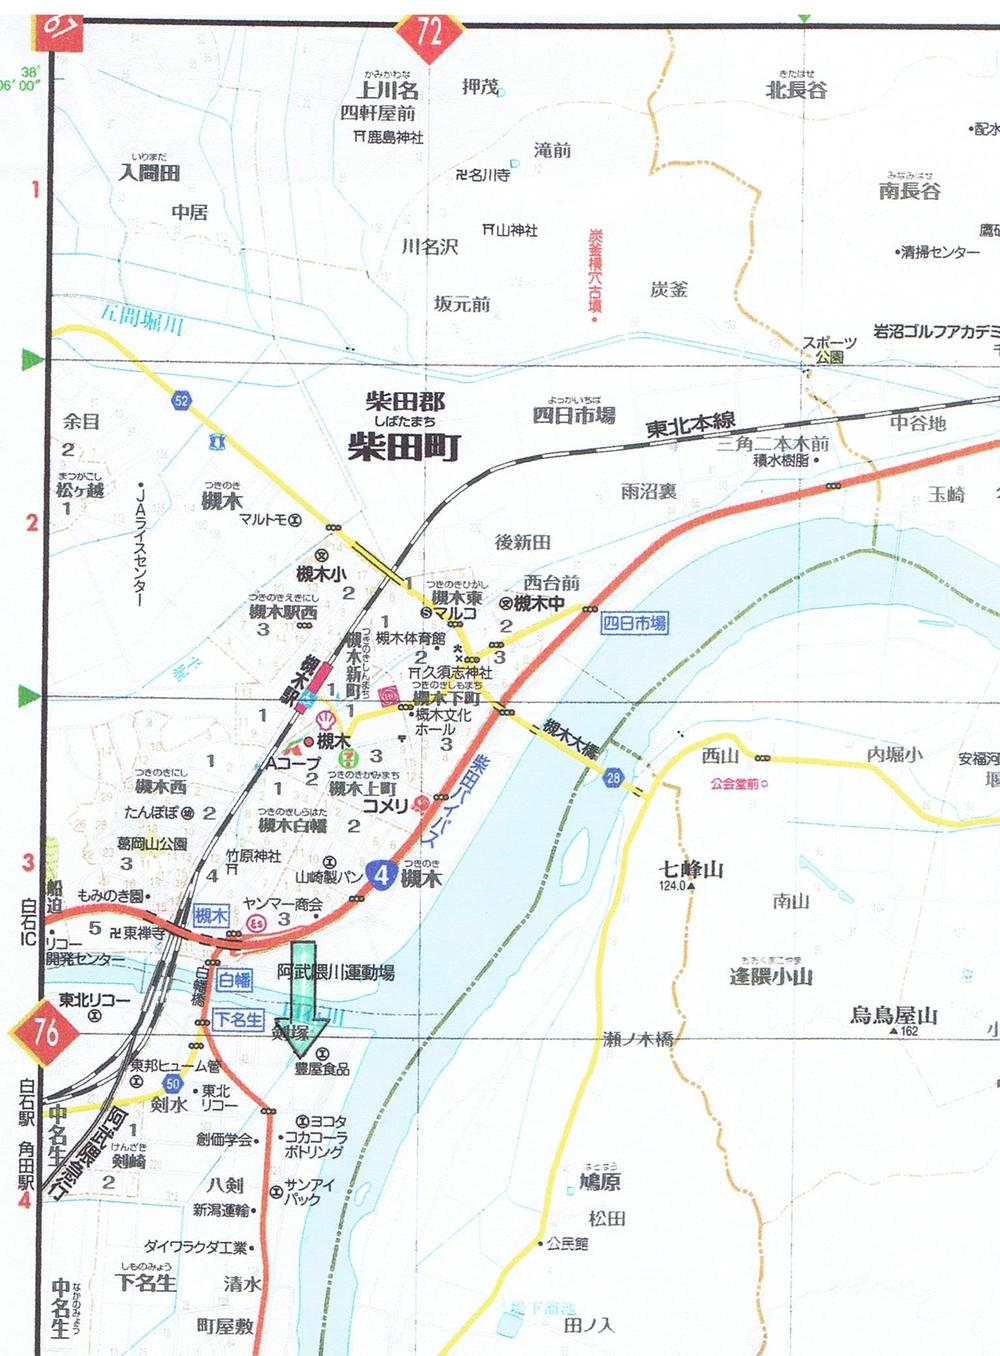 Local guide map. Shibata-cho Eastern map